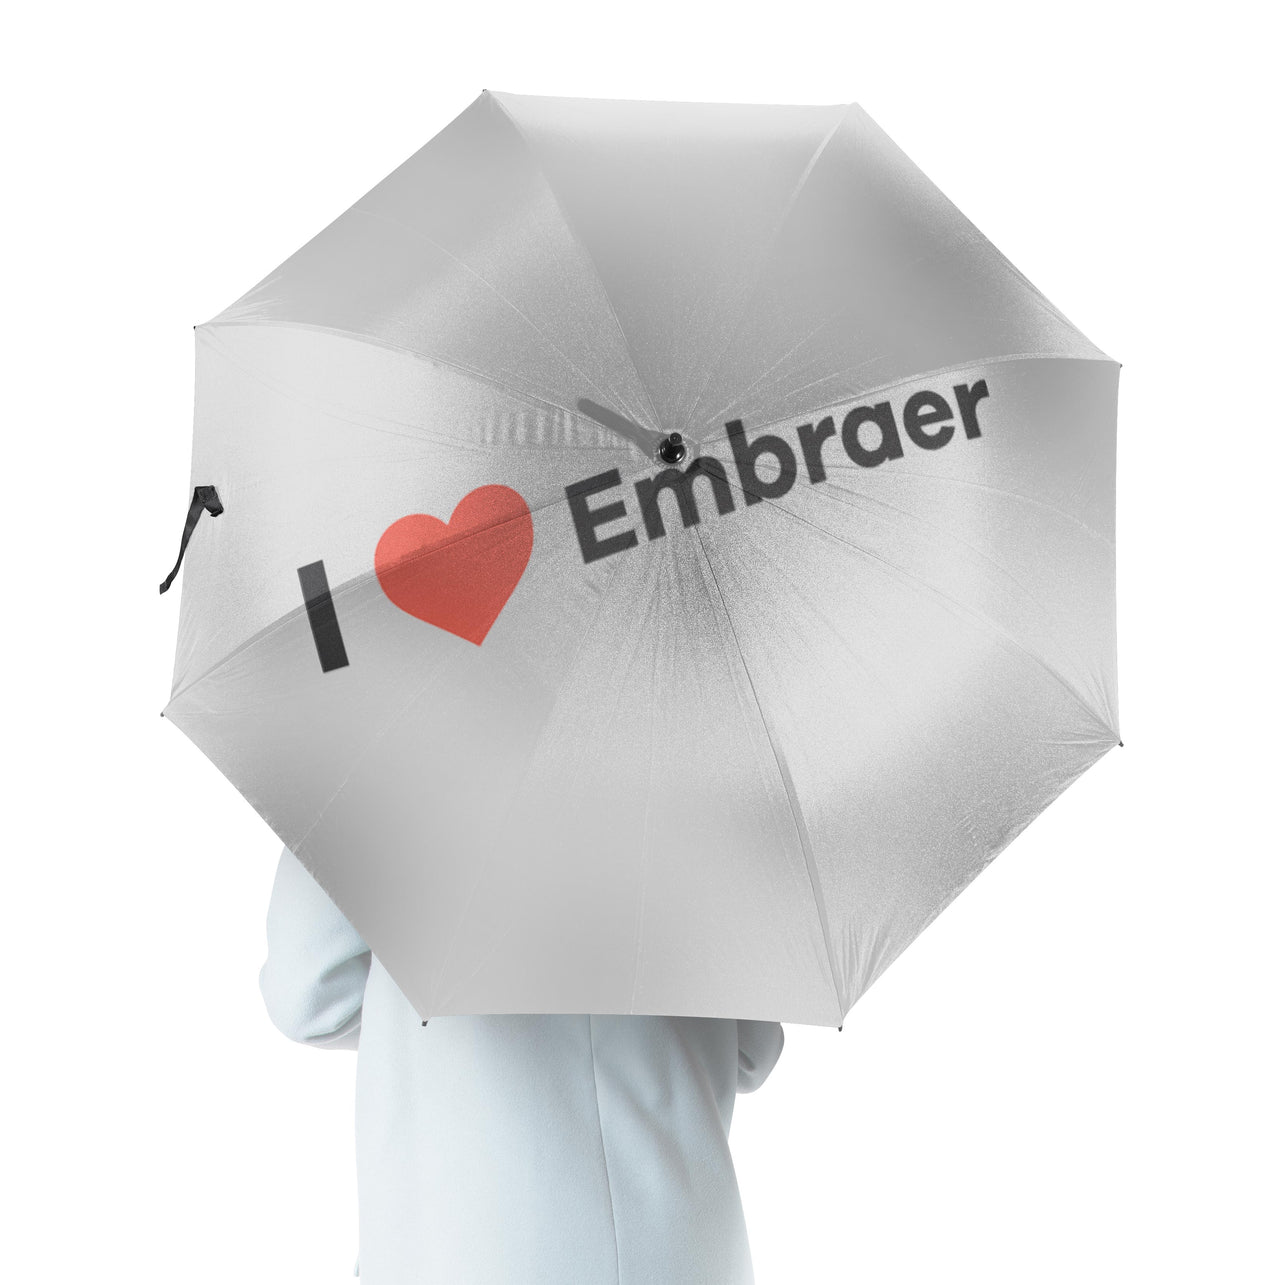 I Love Embraer Designed Umbrella